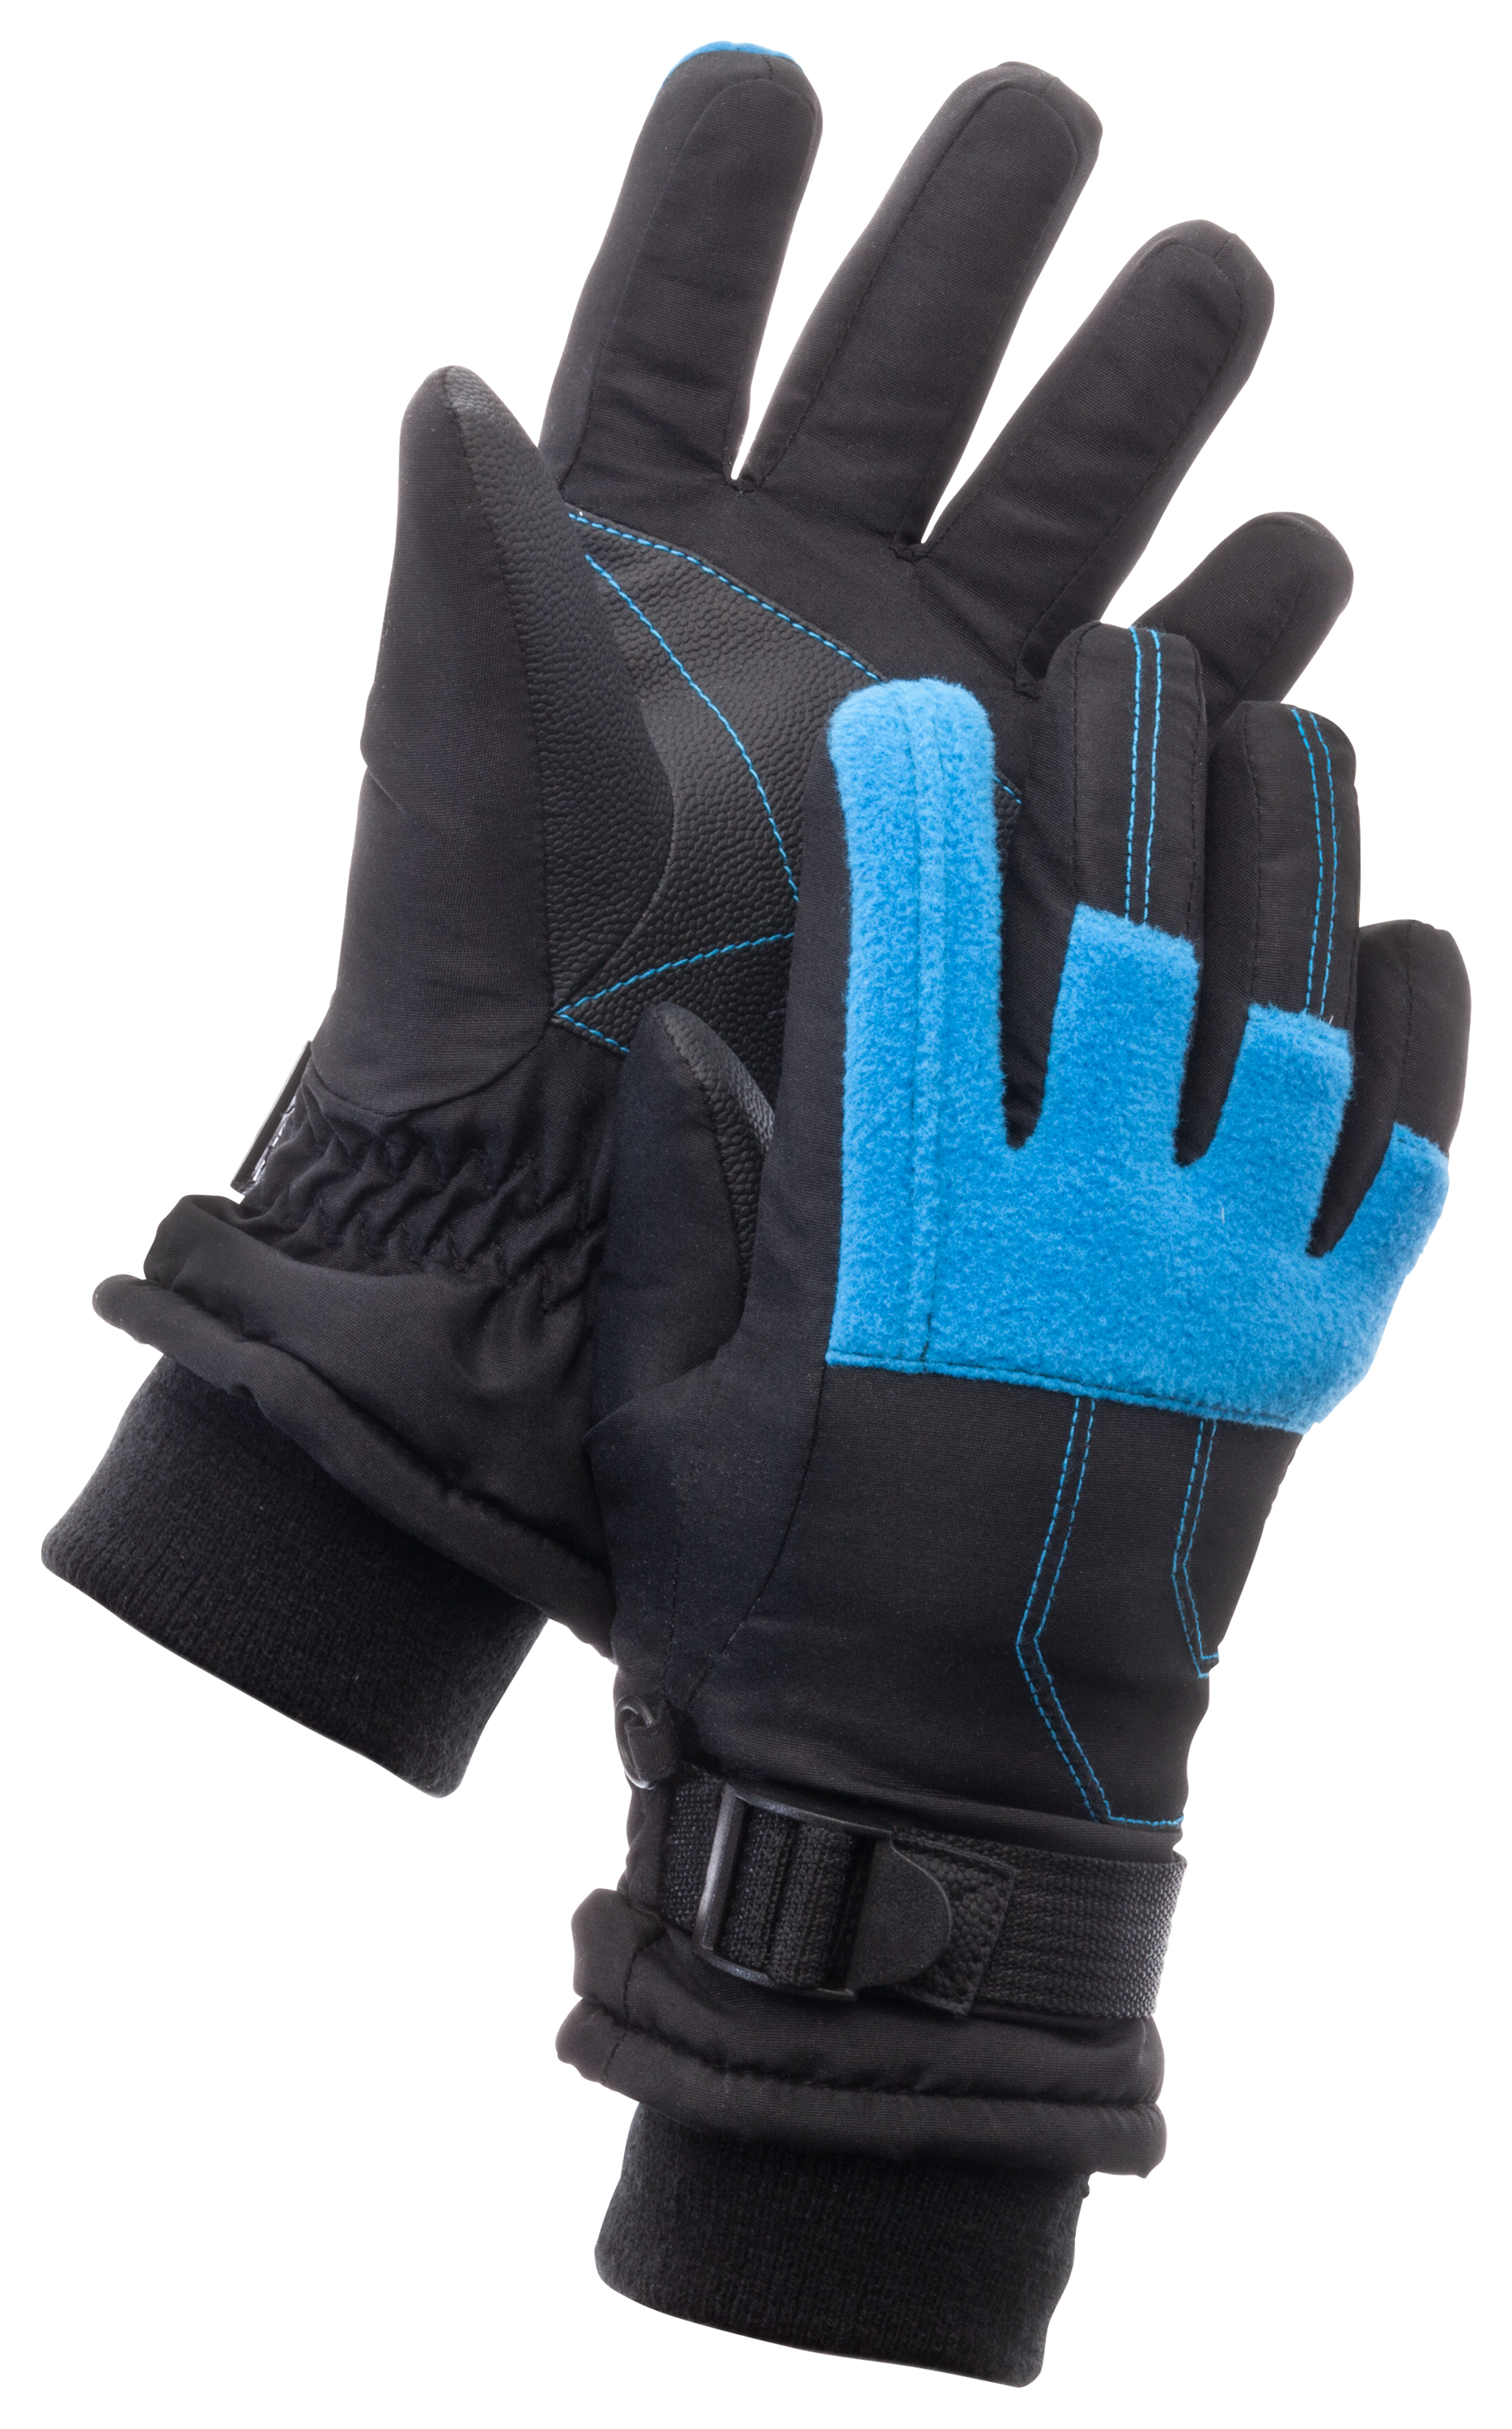 Bass Pro Shops Ski Gloves for Kids